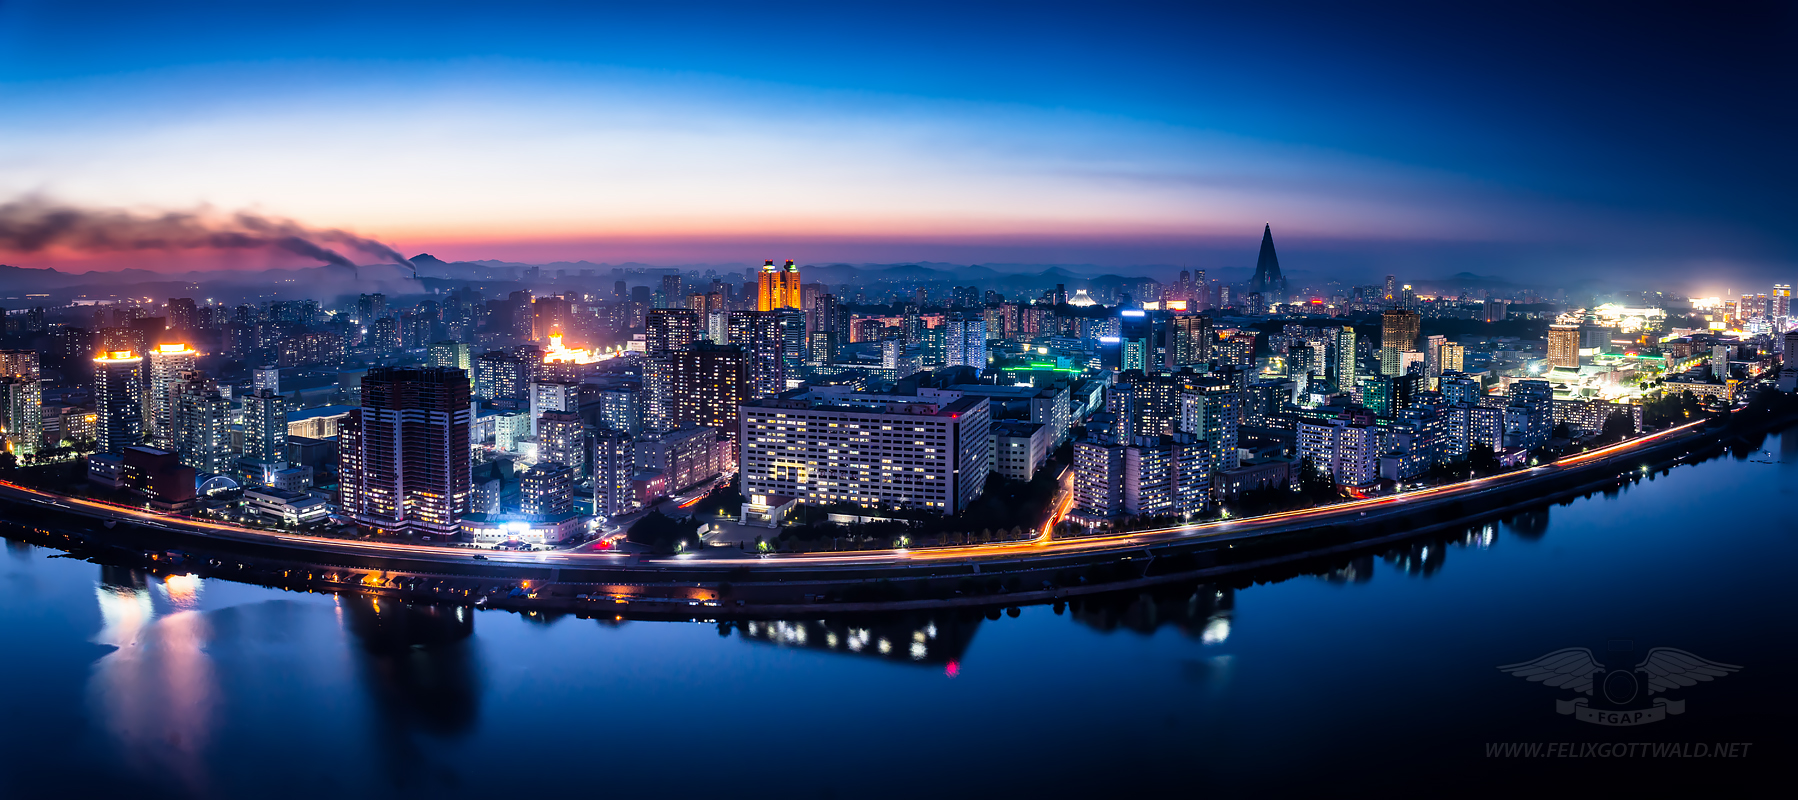 Pyongyang at night - Panorama